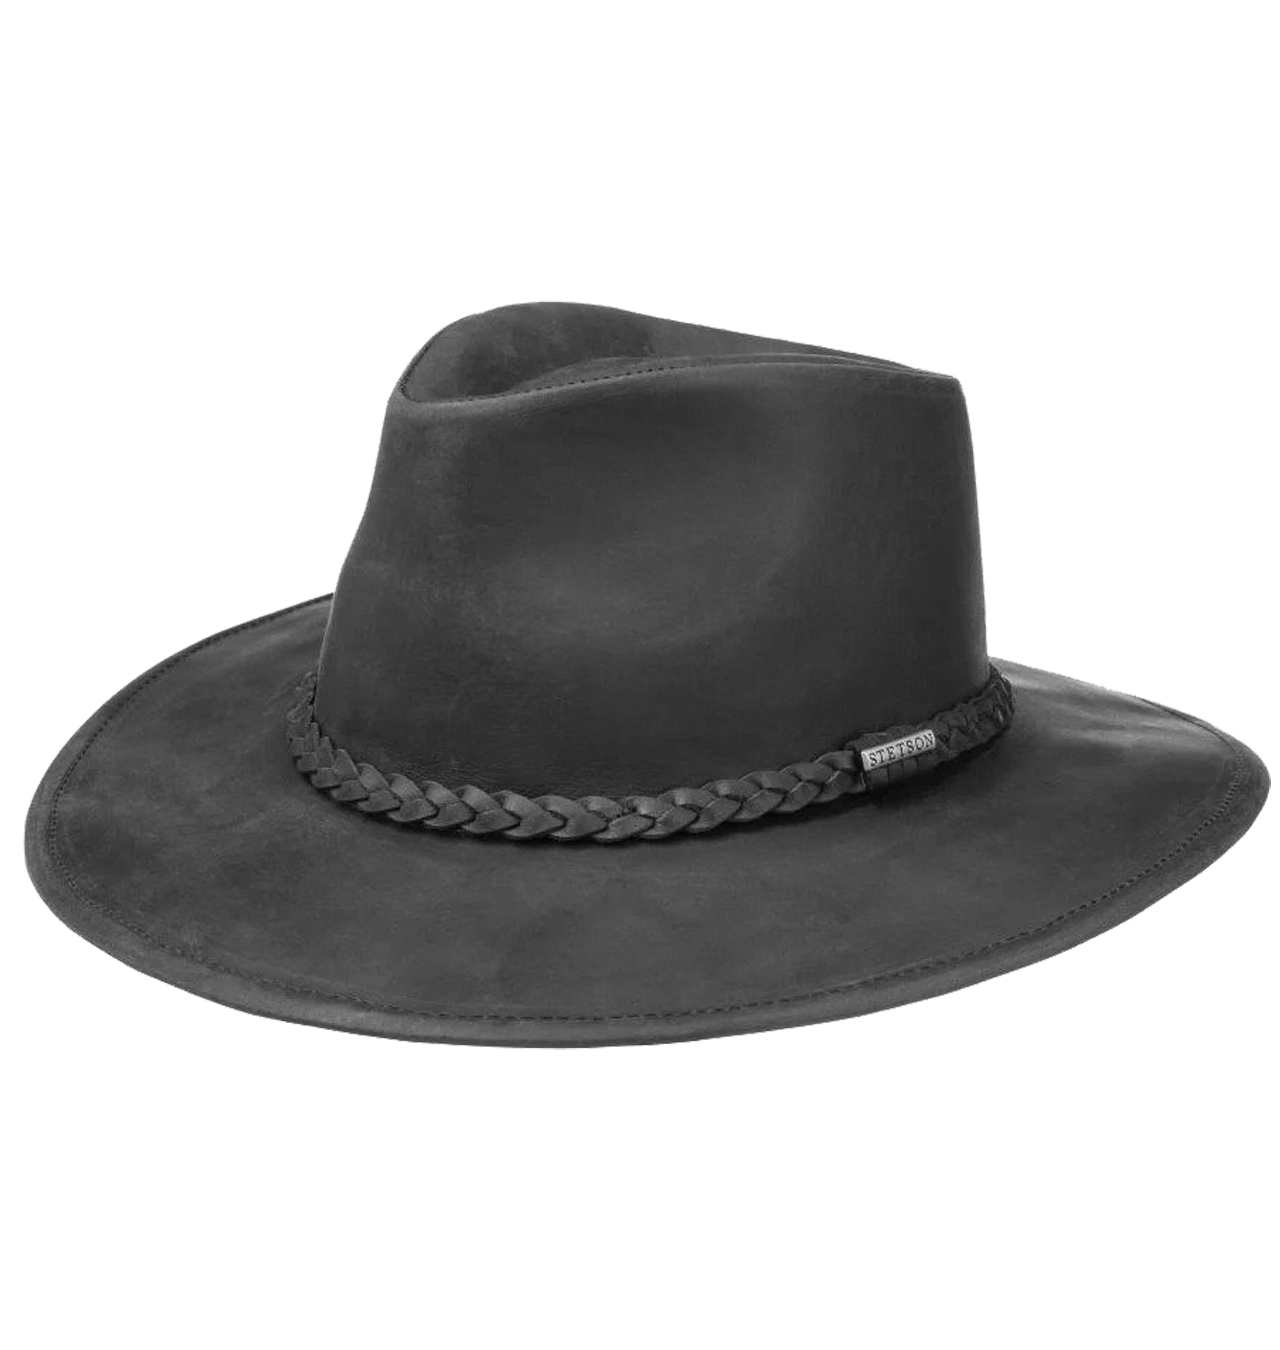 Stetson - Buffalo Leather Western Hat - Black